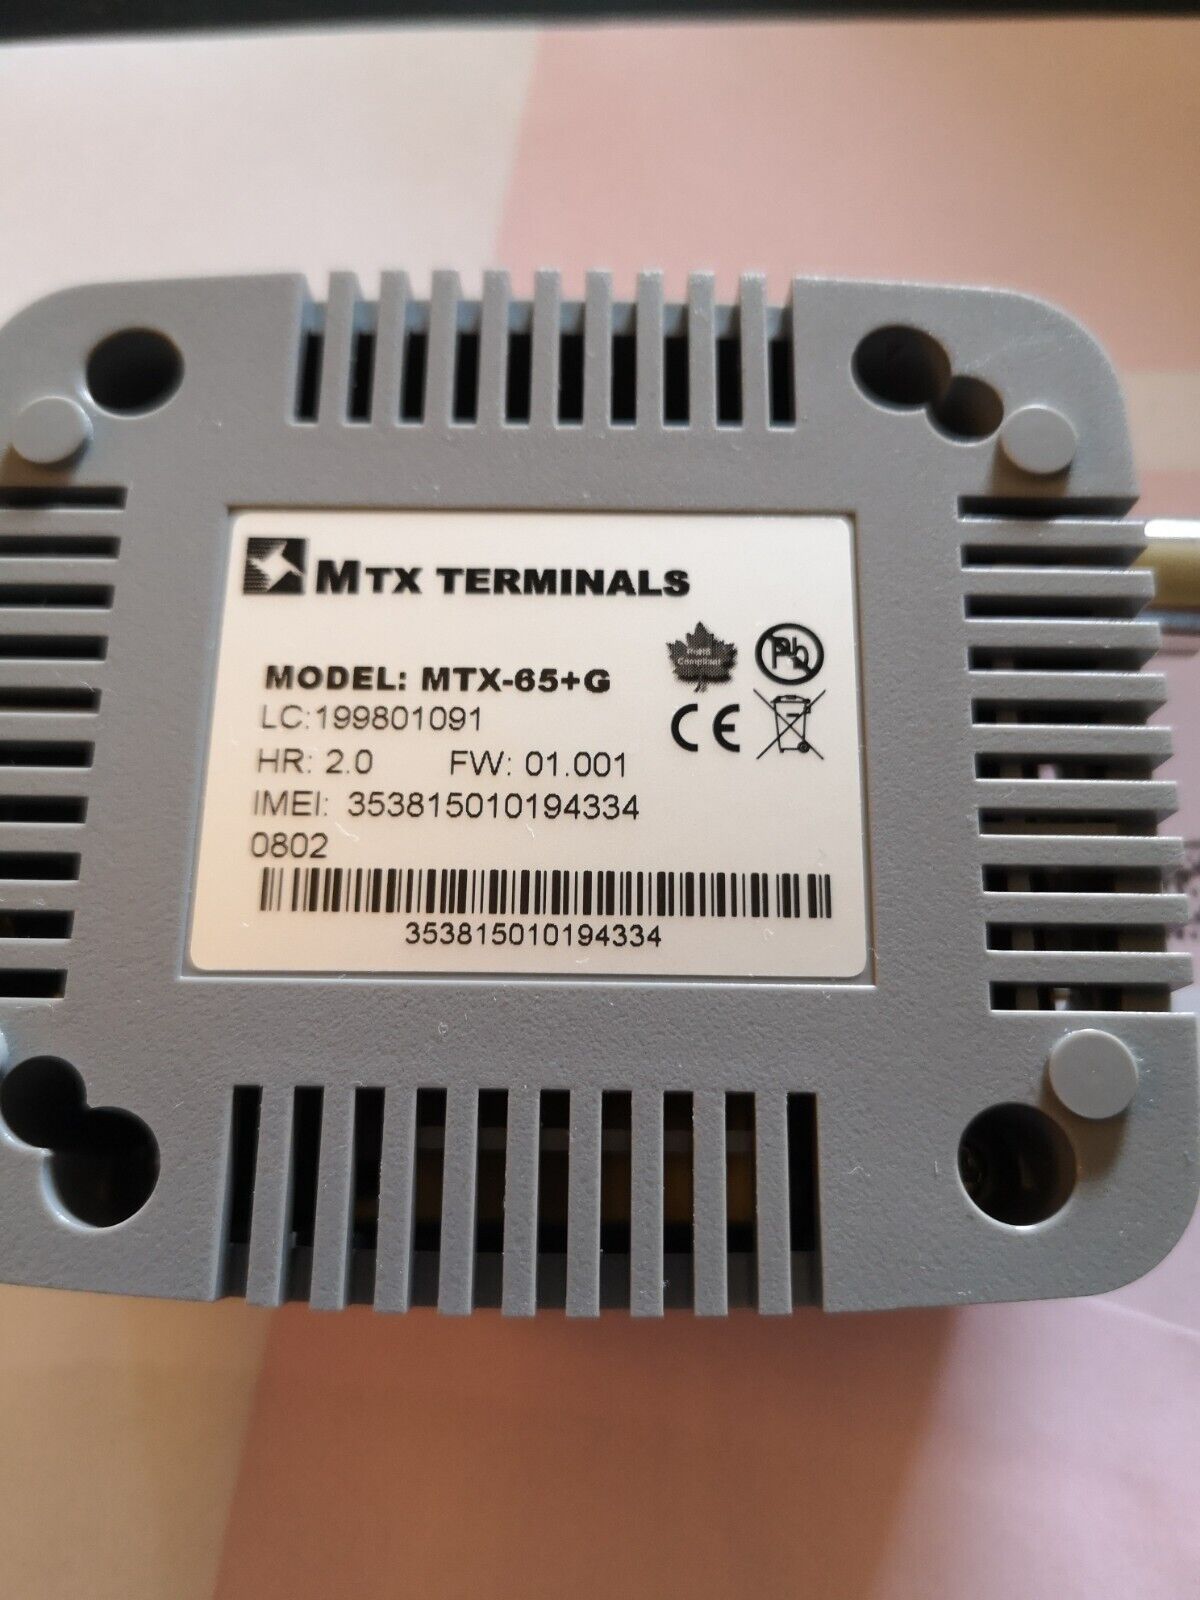 MTX-65+G V6 TERMINAL COMBINED GSM/GPRS + GPS receiver modem terminal with JAVA e